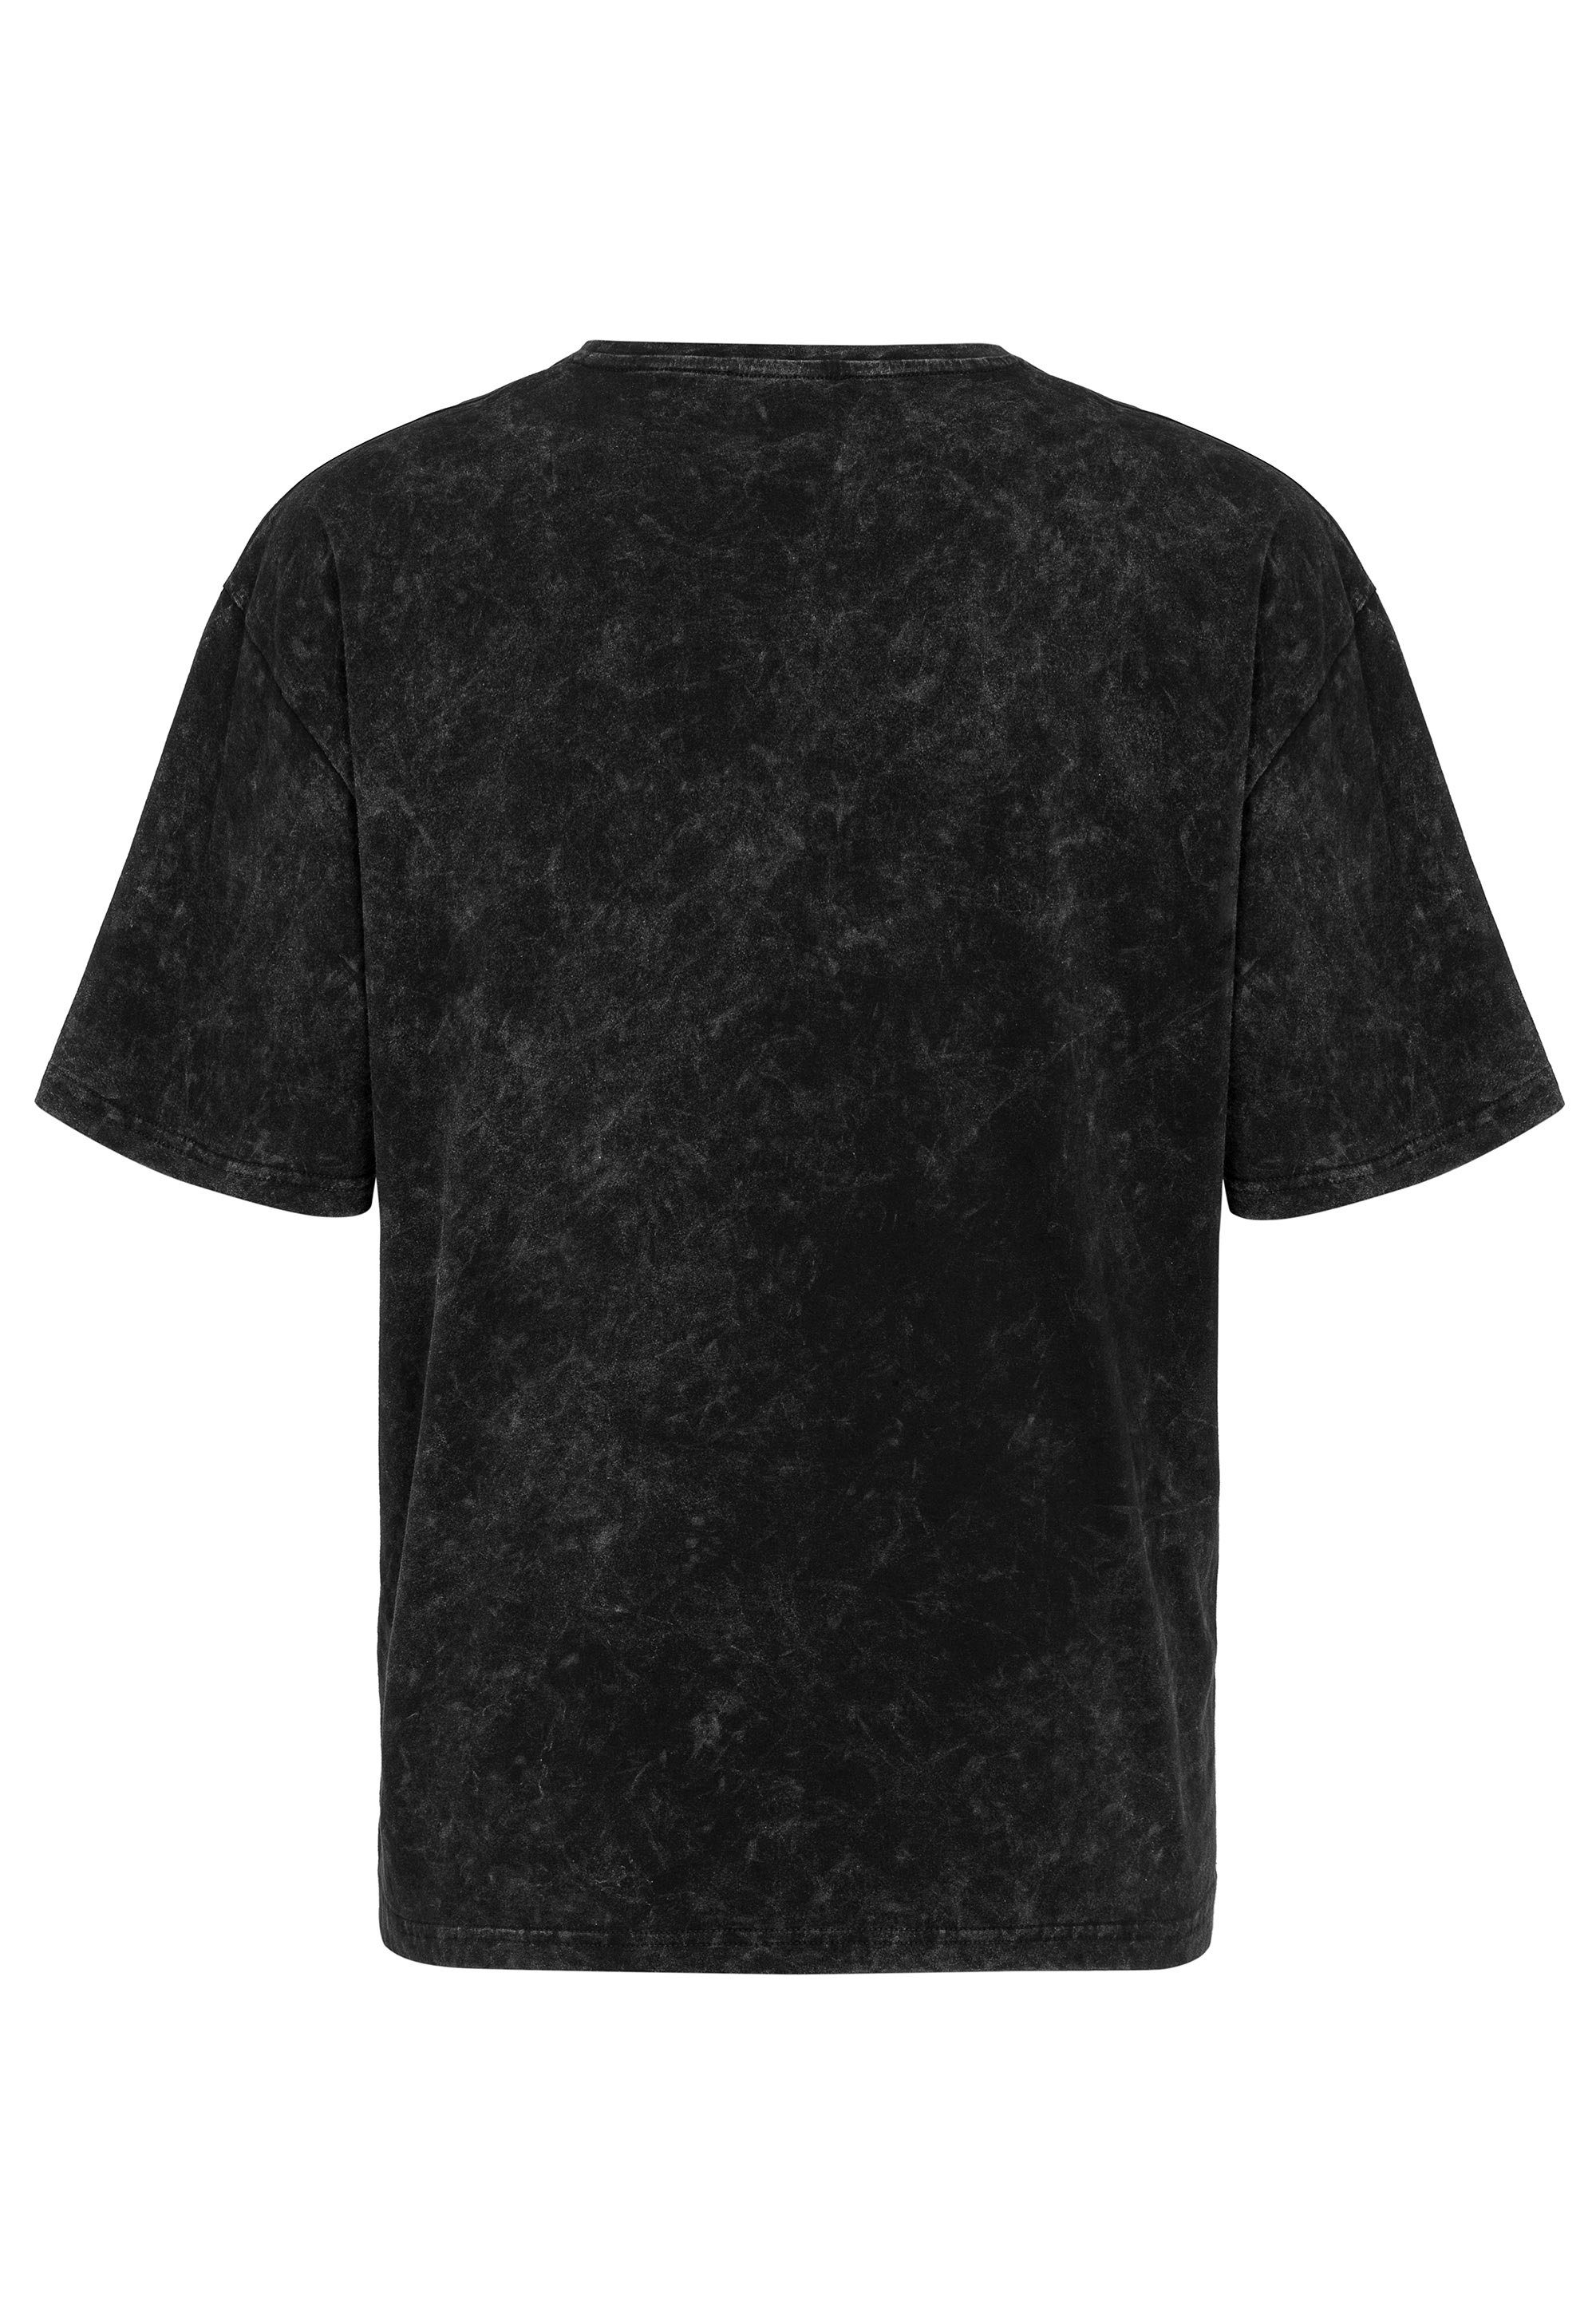 RedBridge Batik-Design T-Shirt in Vista trendigem dunkelgrau